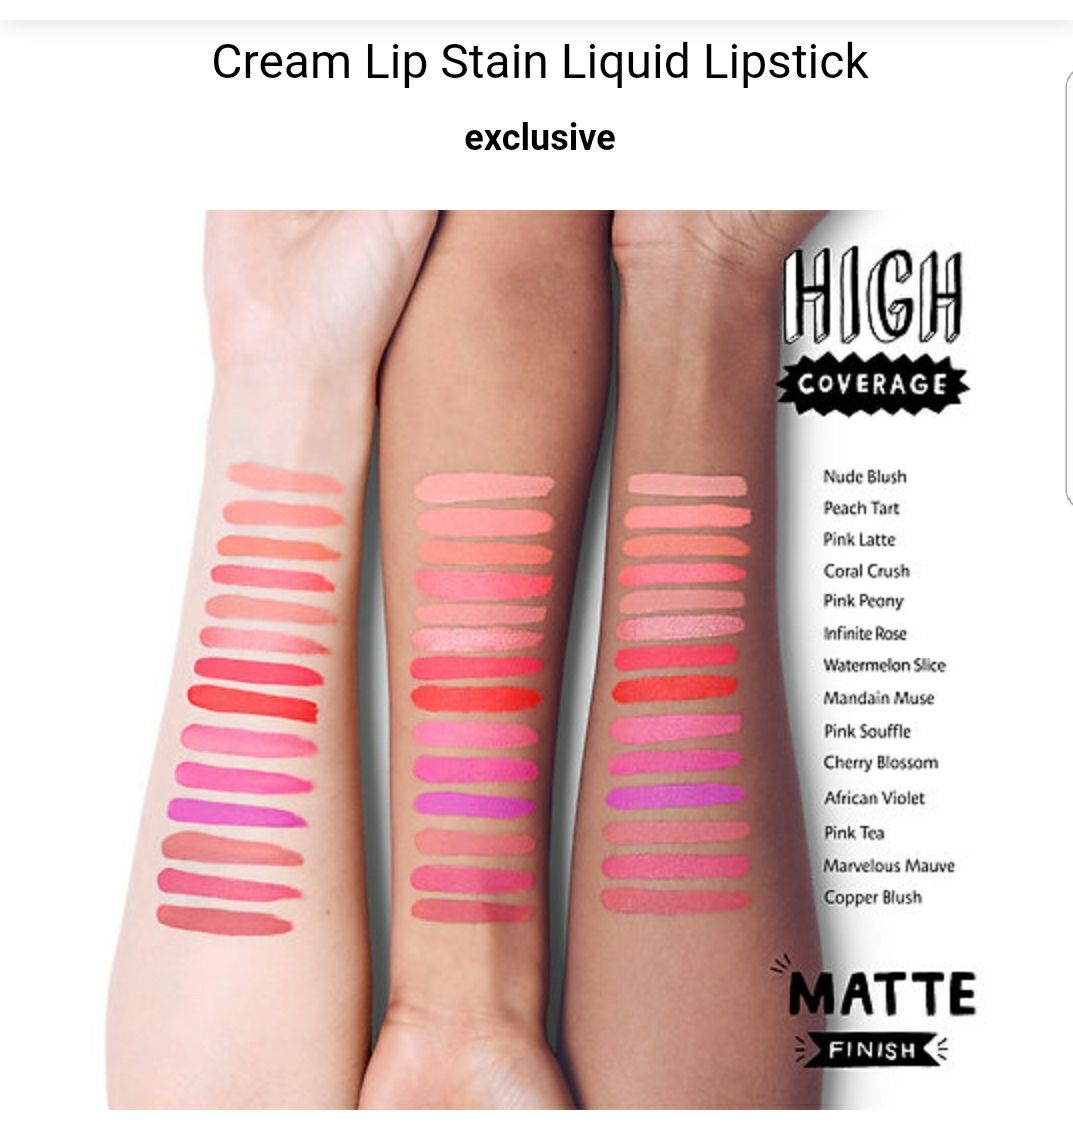 Sephora brand liquid lipstick in pink te... - Beauty Insider Community